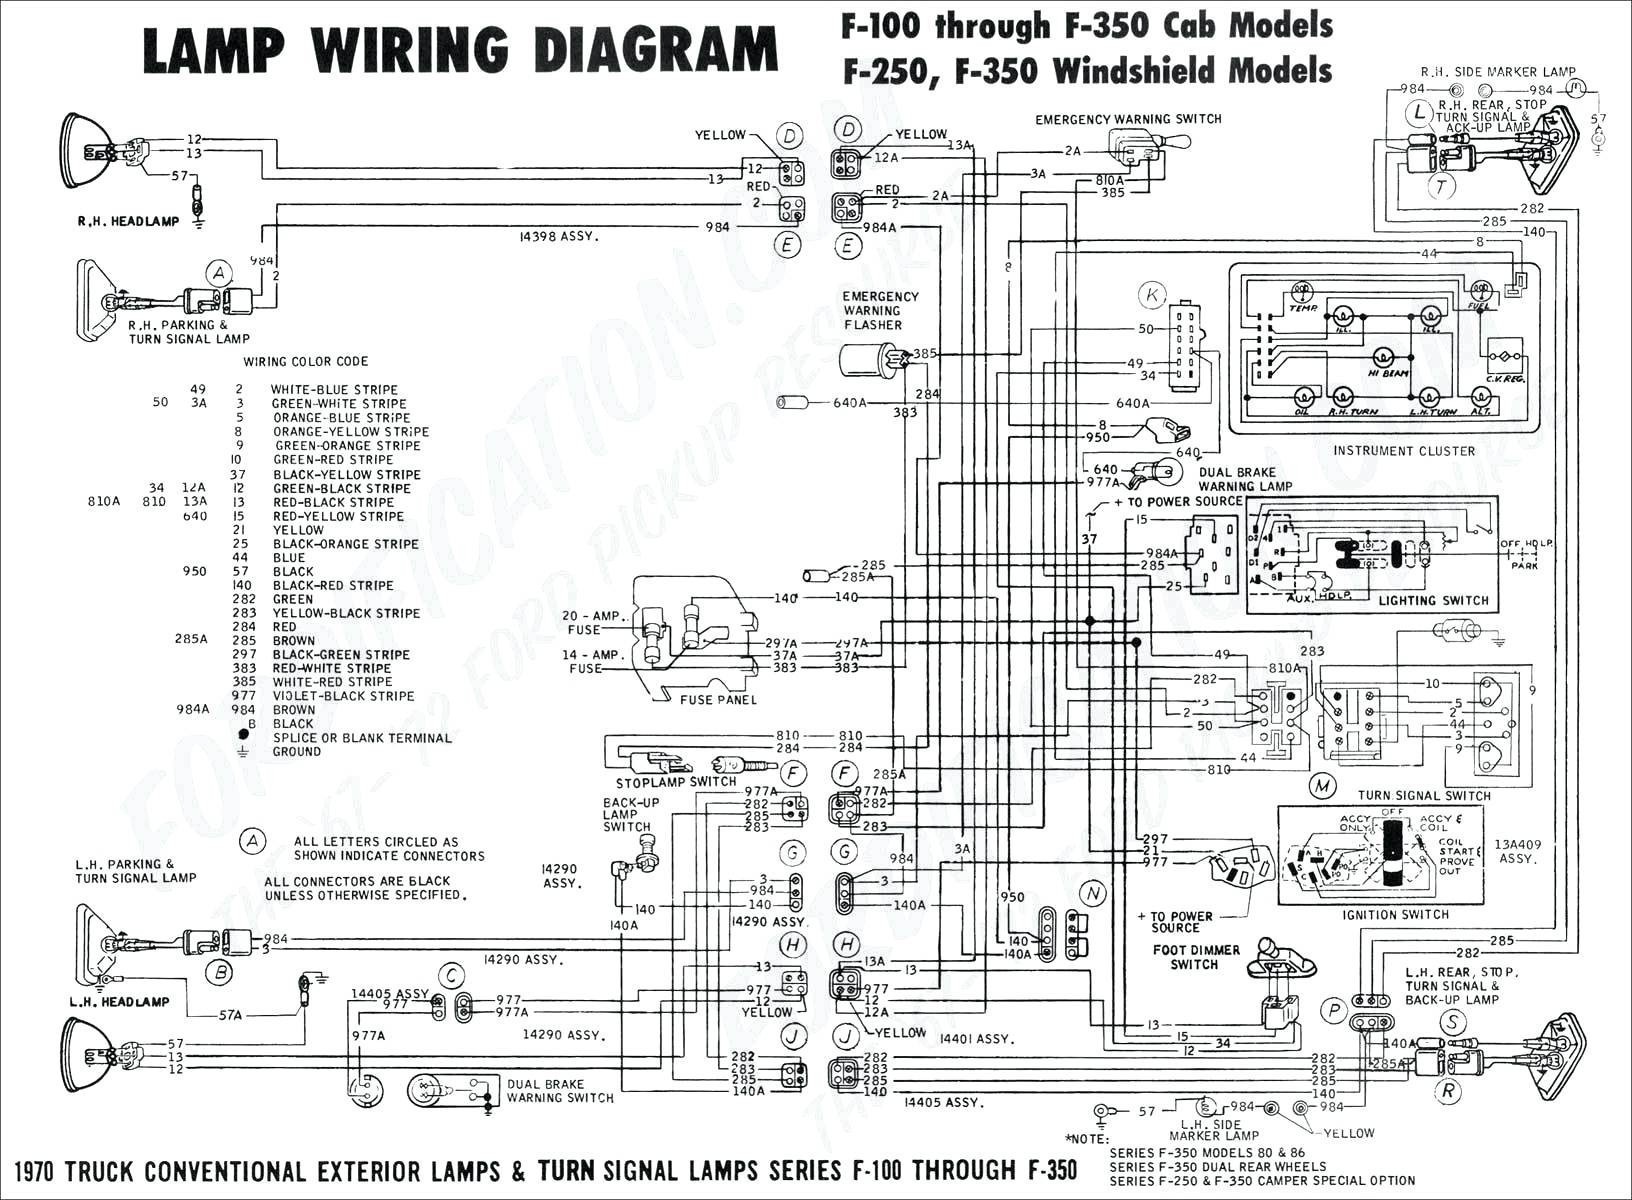 Leviton 3 Way Dimmer Switch Wiring Diagram Inspirational 86 Vanagon Wiring Dimmer Switch Circuit Diagram Symbols •